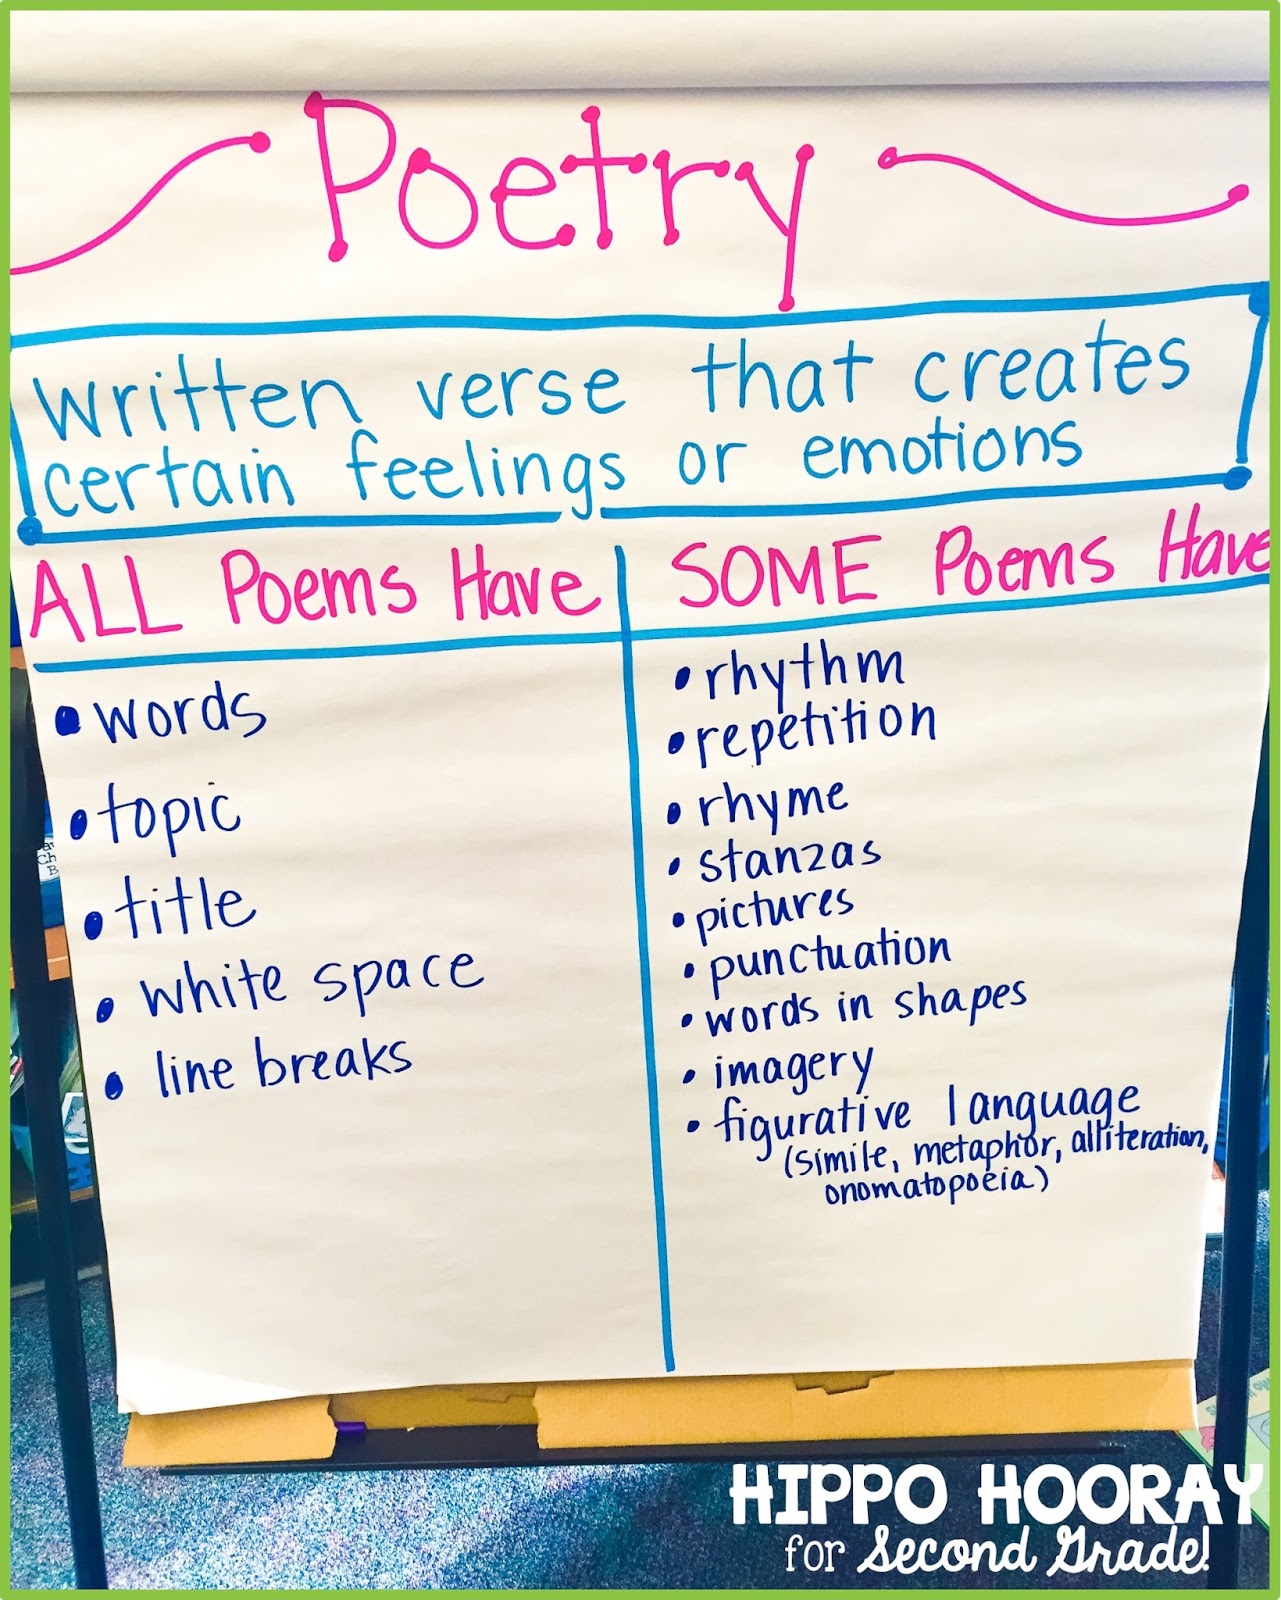 Beyond Acrostics & Haiku: Teaching Poetry - Hippo Hooray for Second Grade!